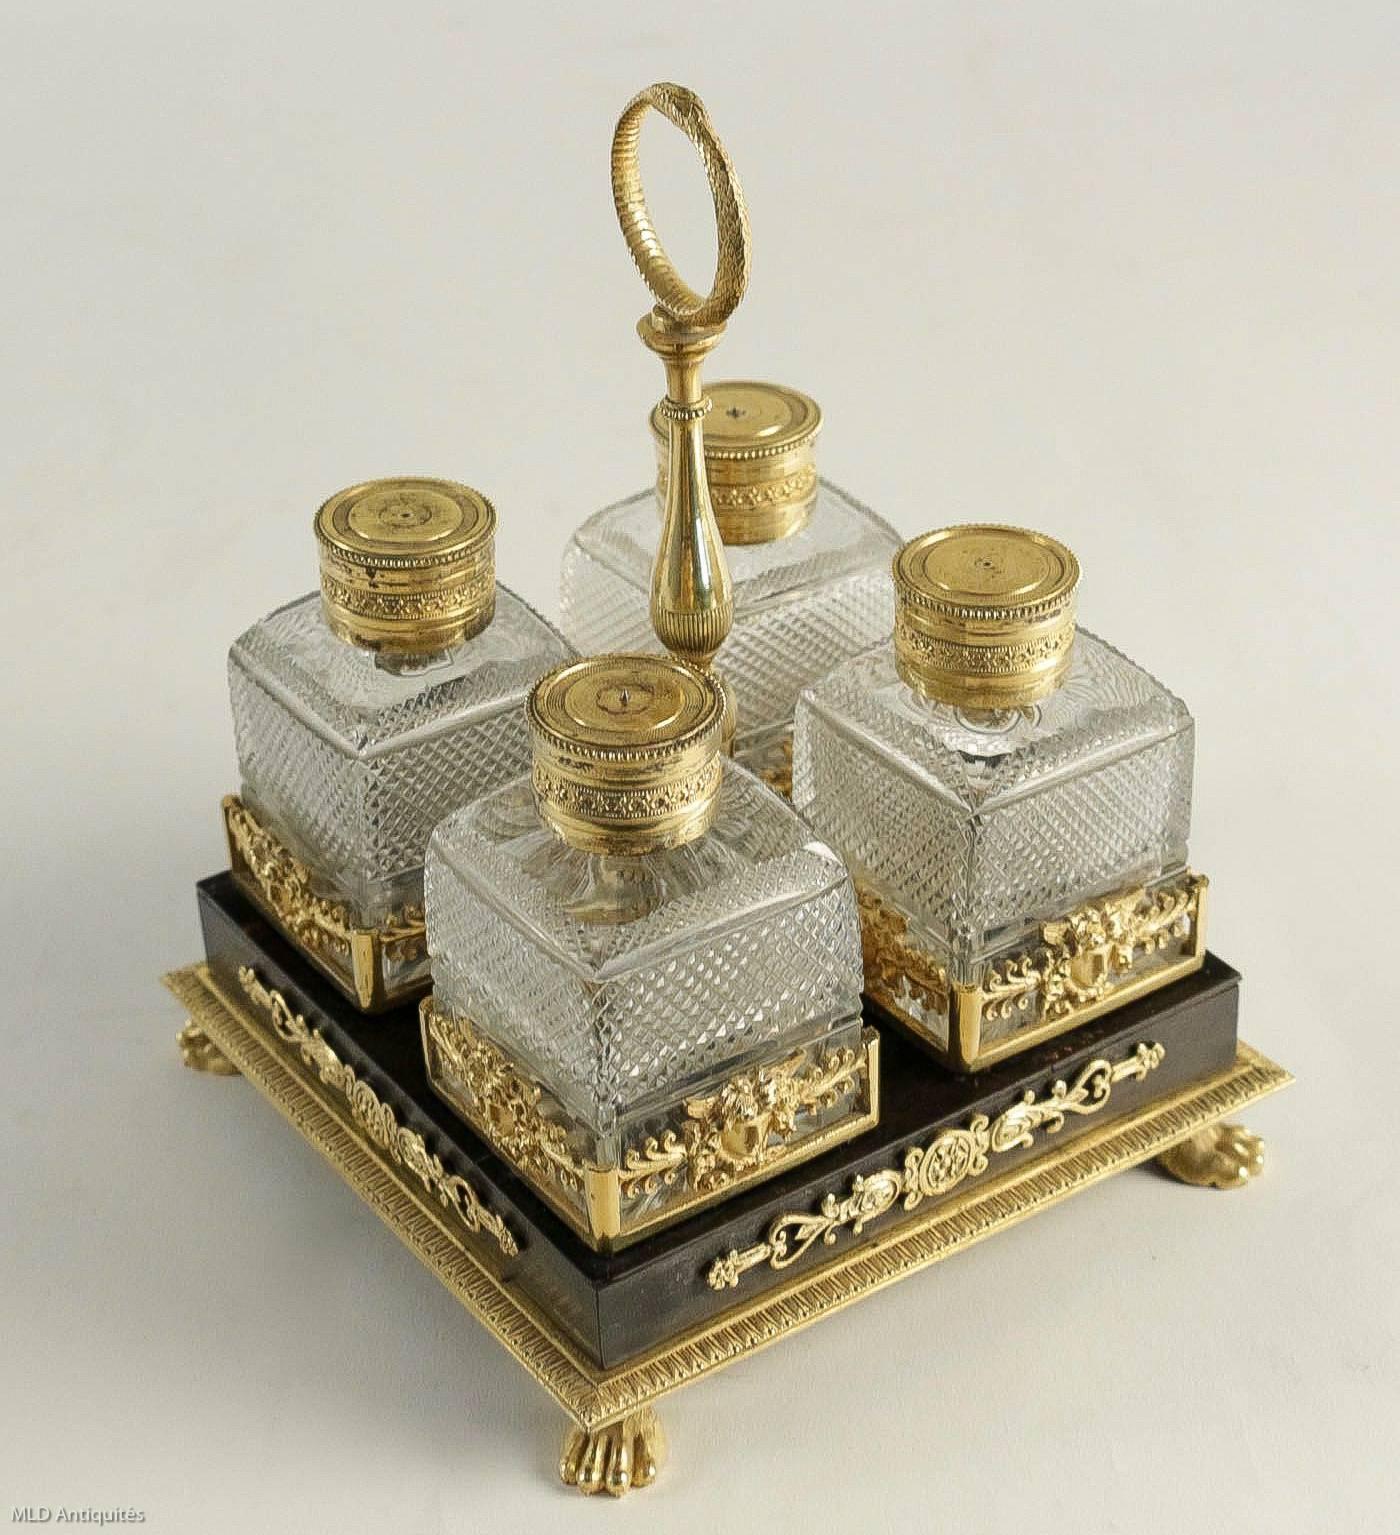 Gilt French Empire Period Fragrances Necessary Attributed to Ravrio, circa 1805-1810